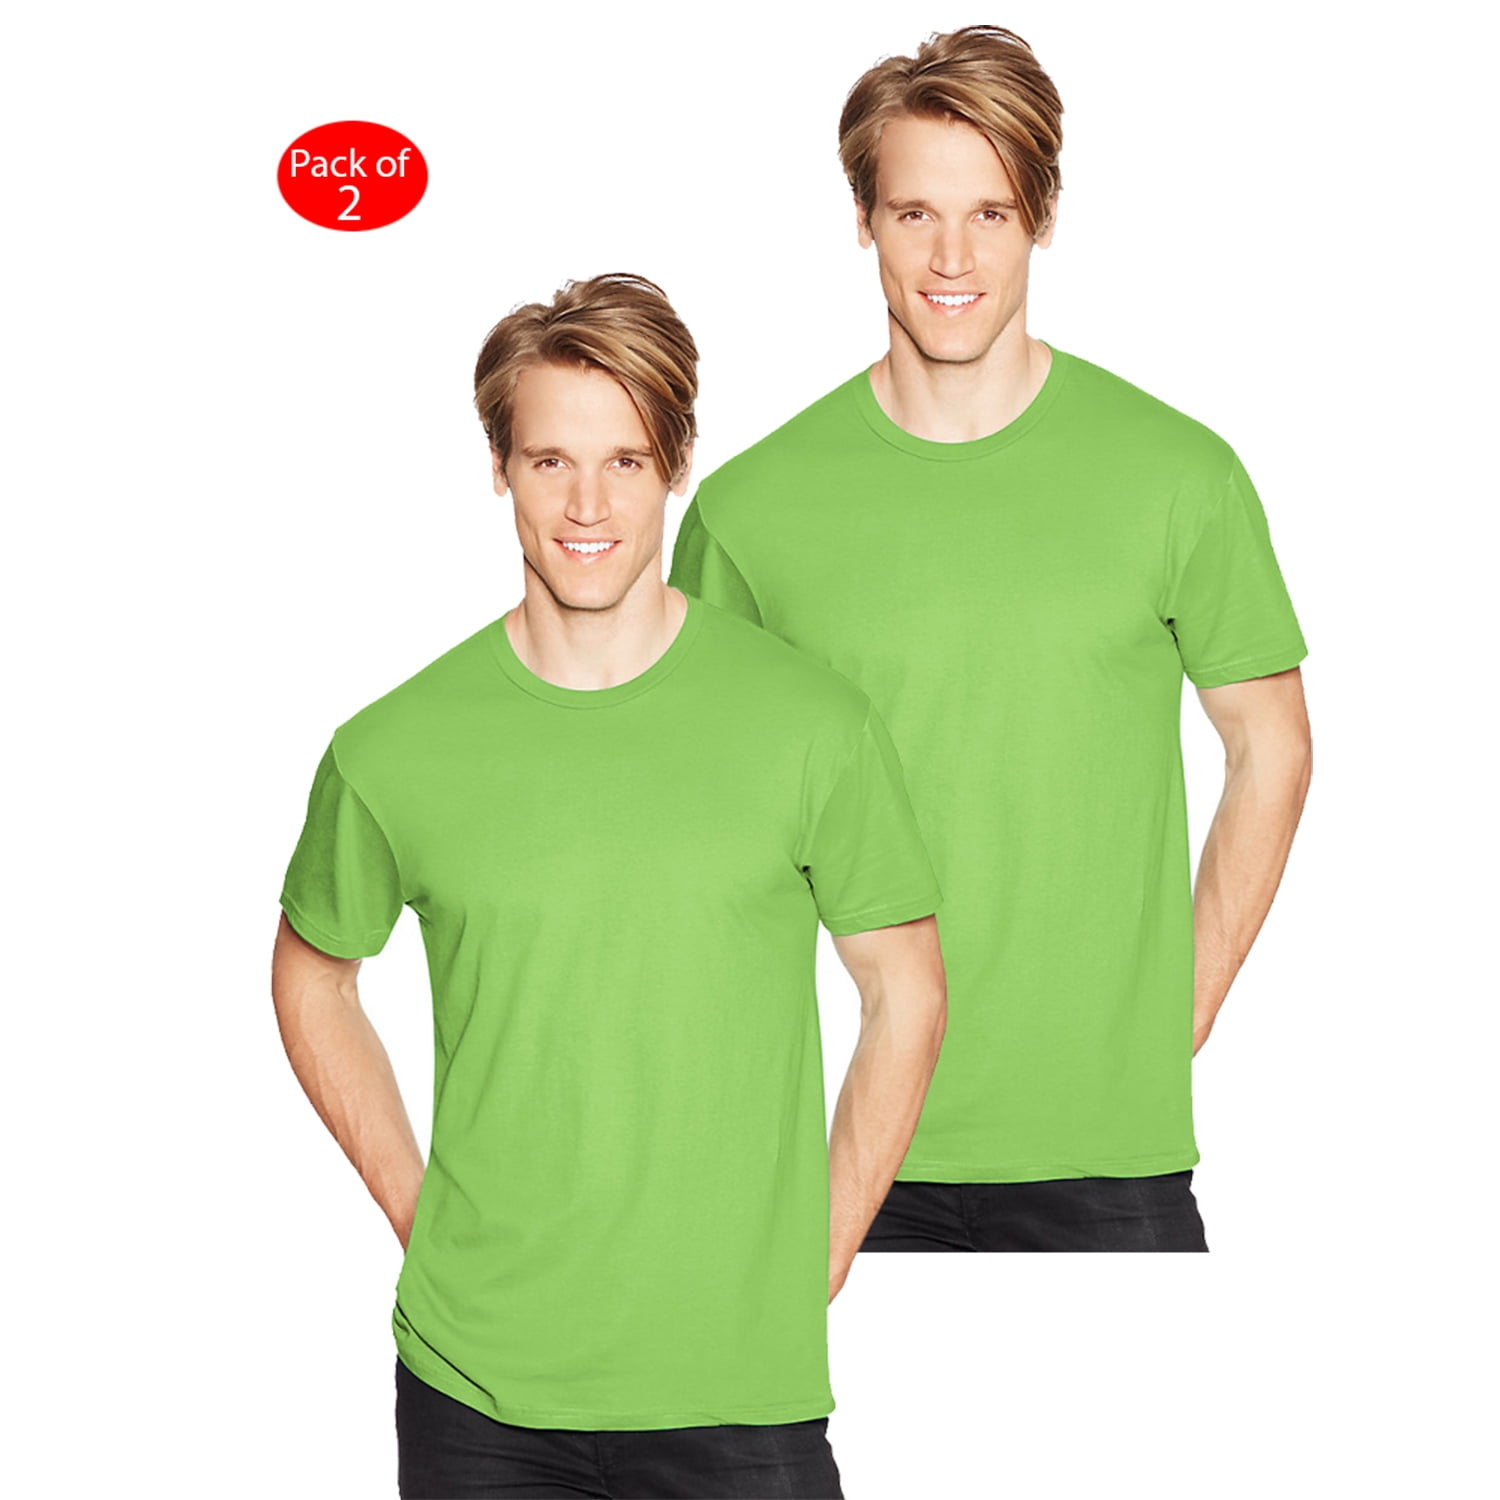 Pack of 4 2 Lime / 2 Smoke Grey Hanes Mens Comfortsoft T-Shirt S 